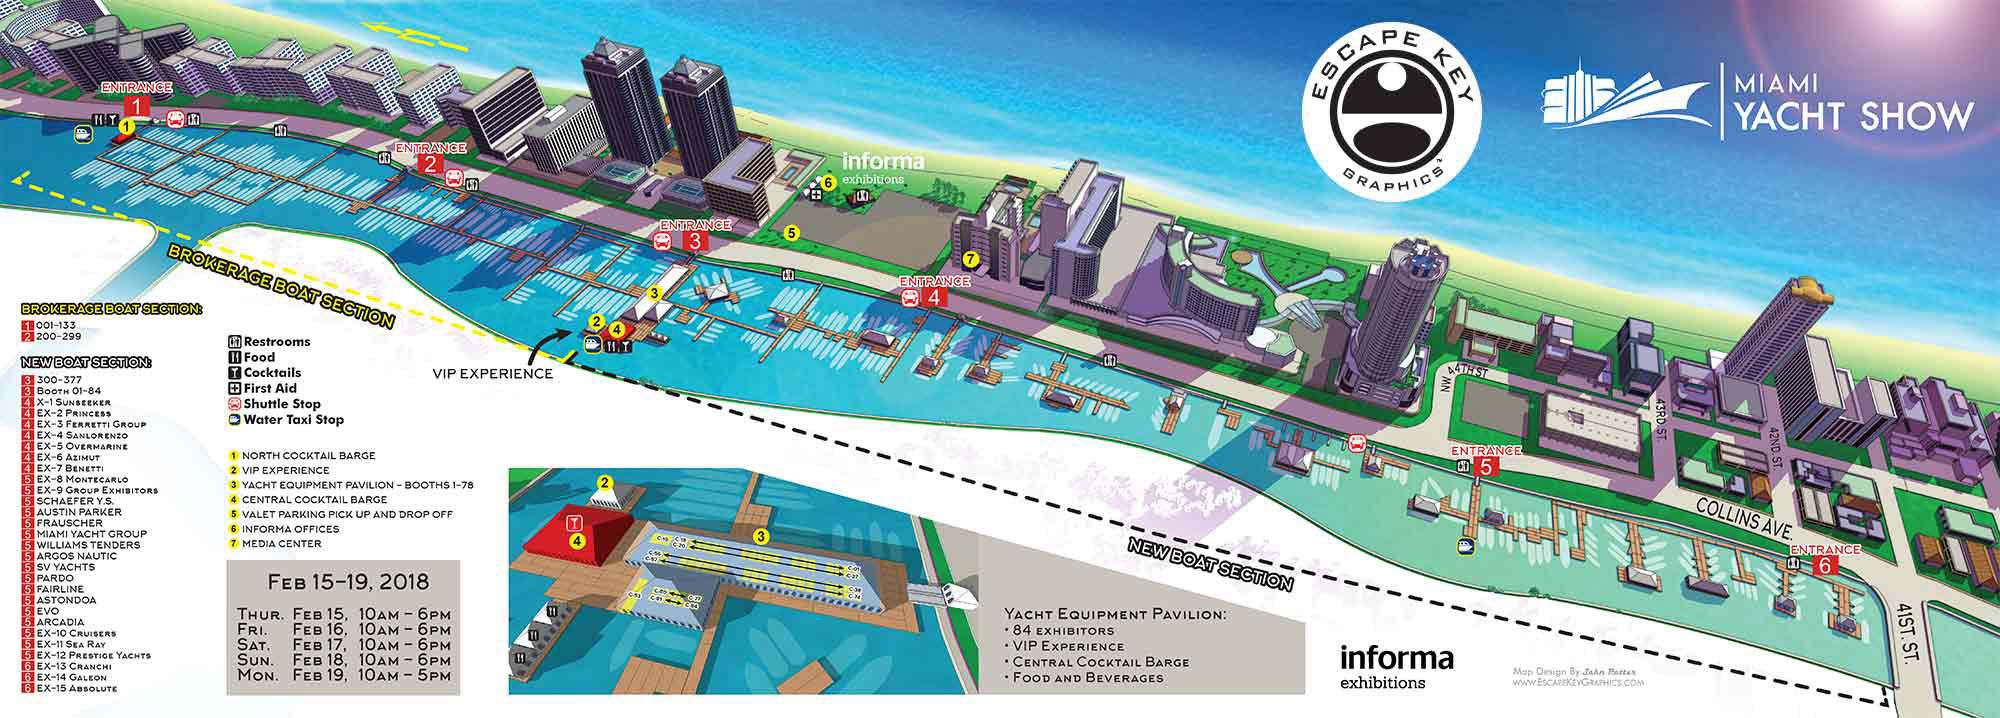 Miami Yacht Show Map